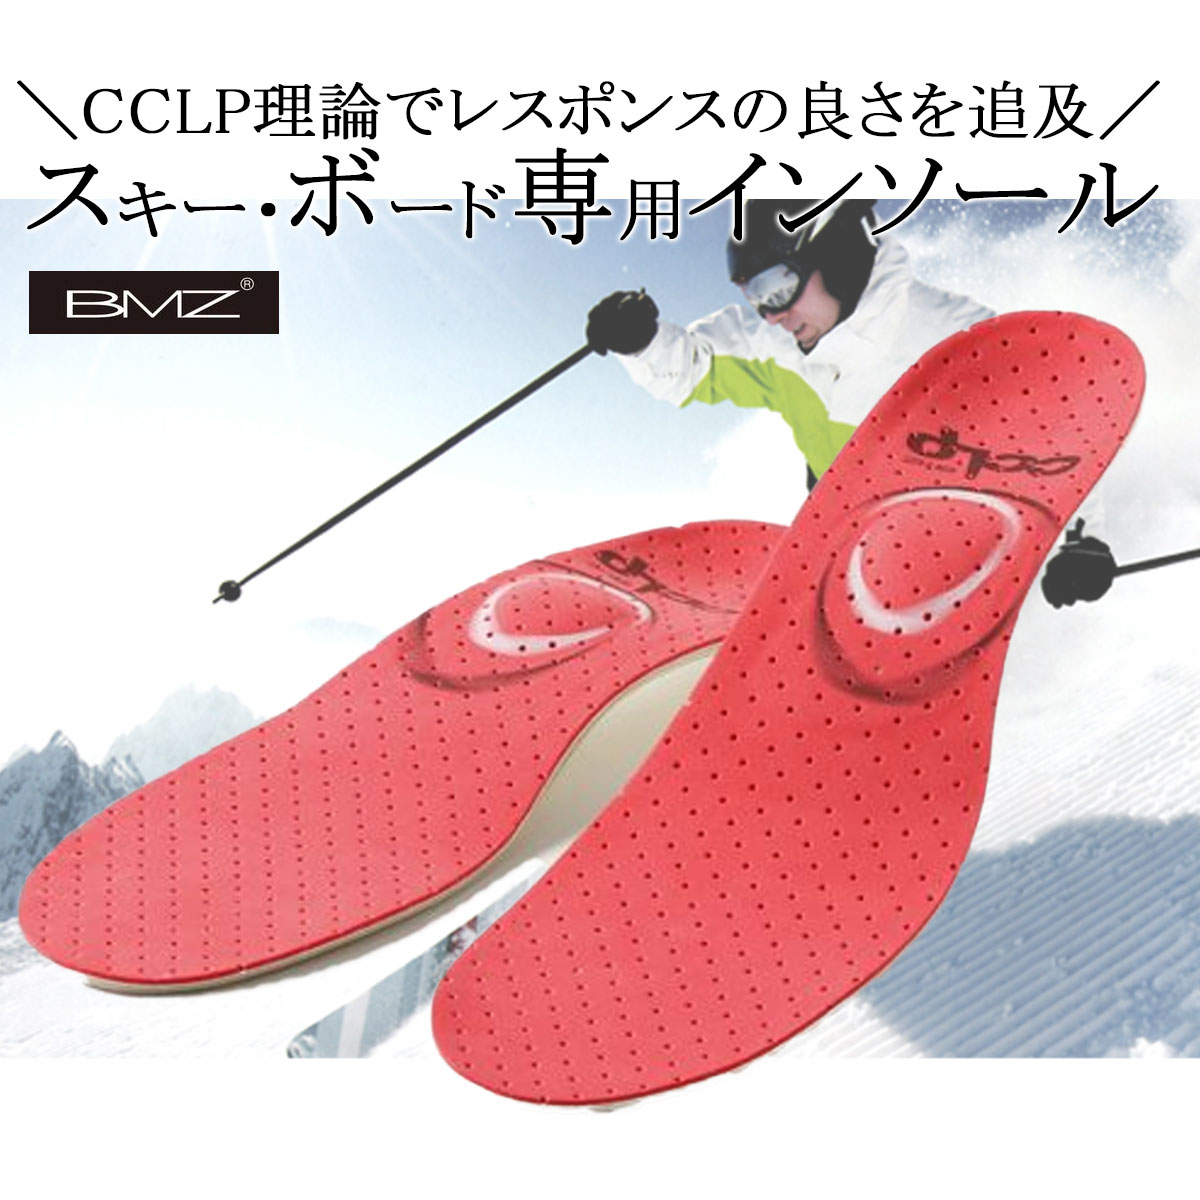 BMZ カルパワー スキー インソール 22.0-23.5cm XS 靴 ブーツ 中敷き インソール スキー 安定性 運動性..